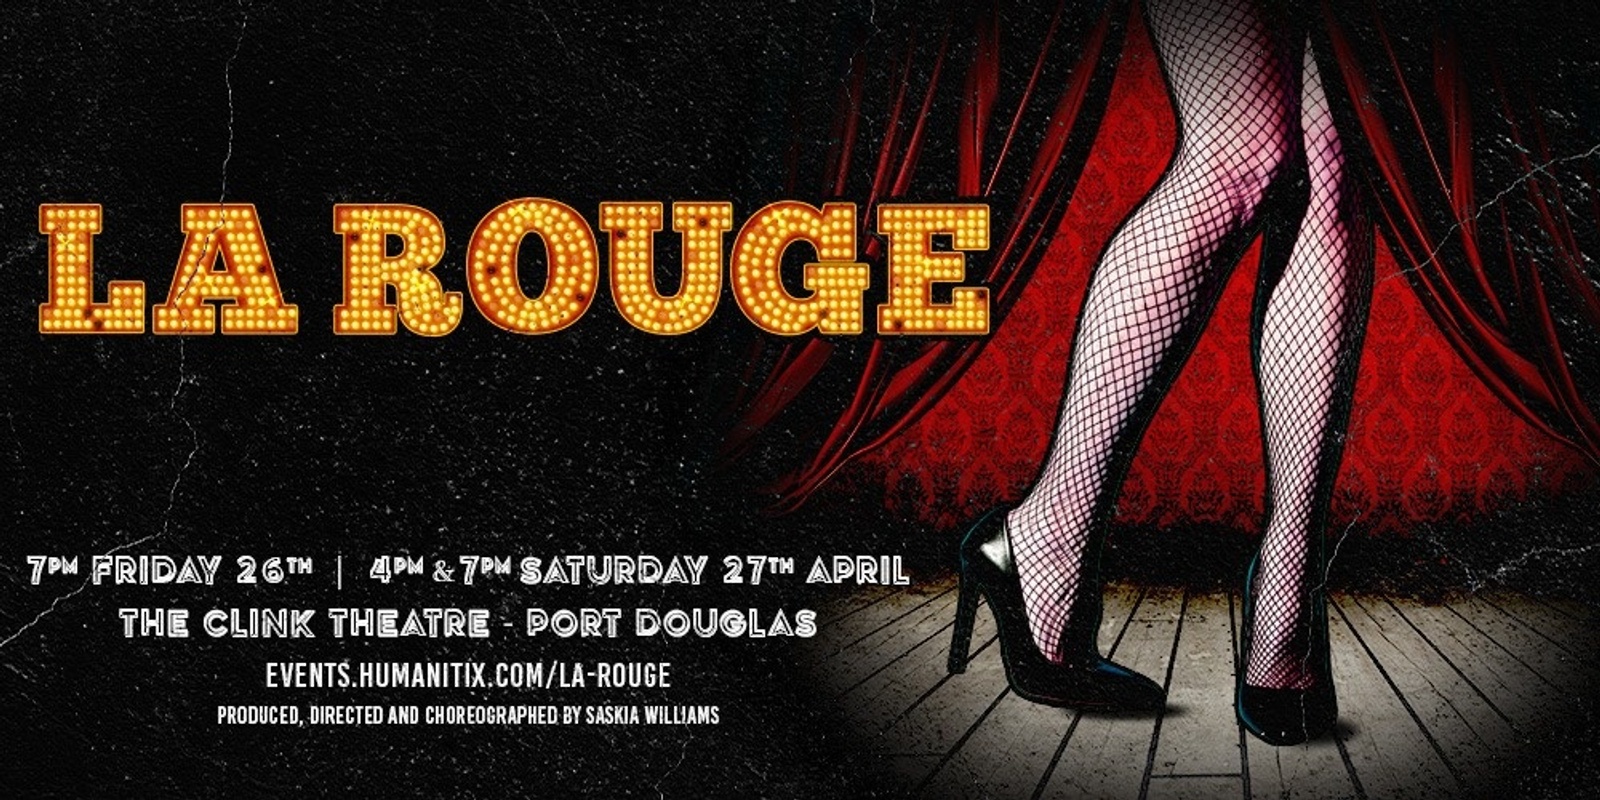 Banner image for "LA ROUGE"